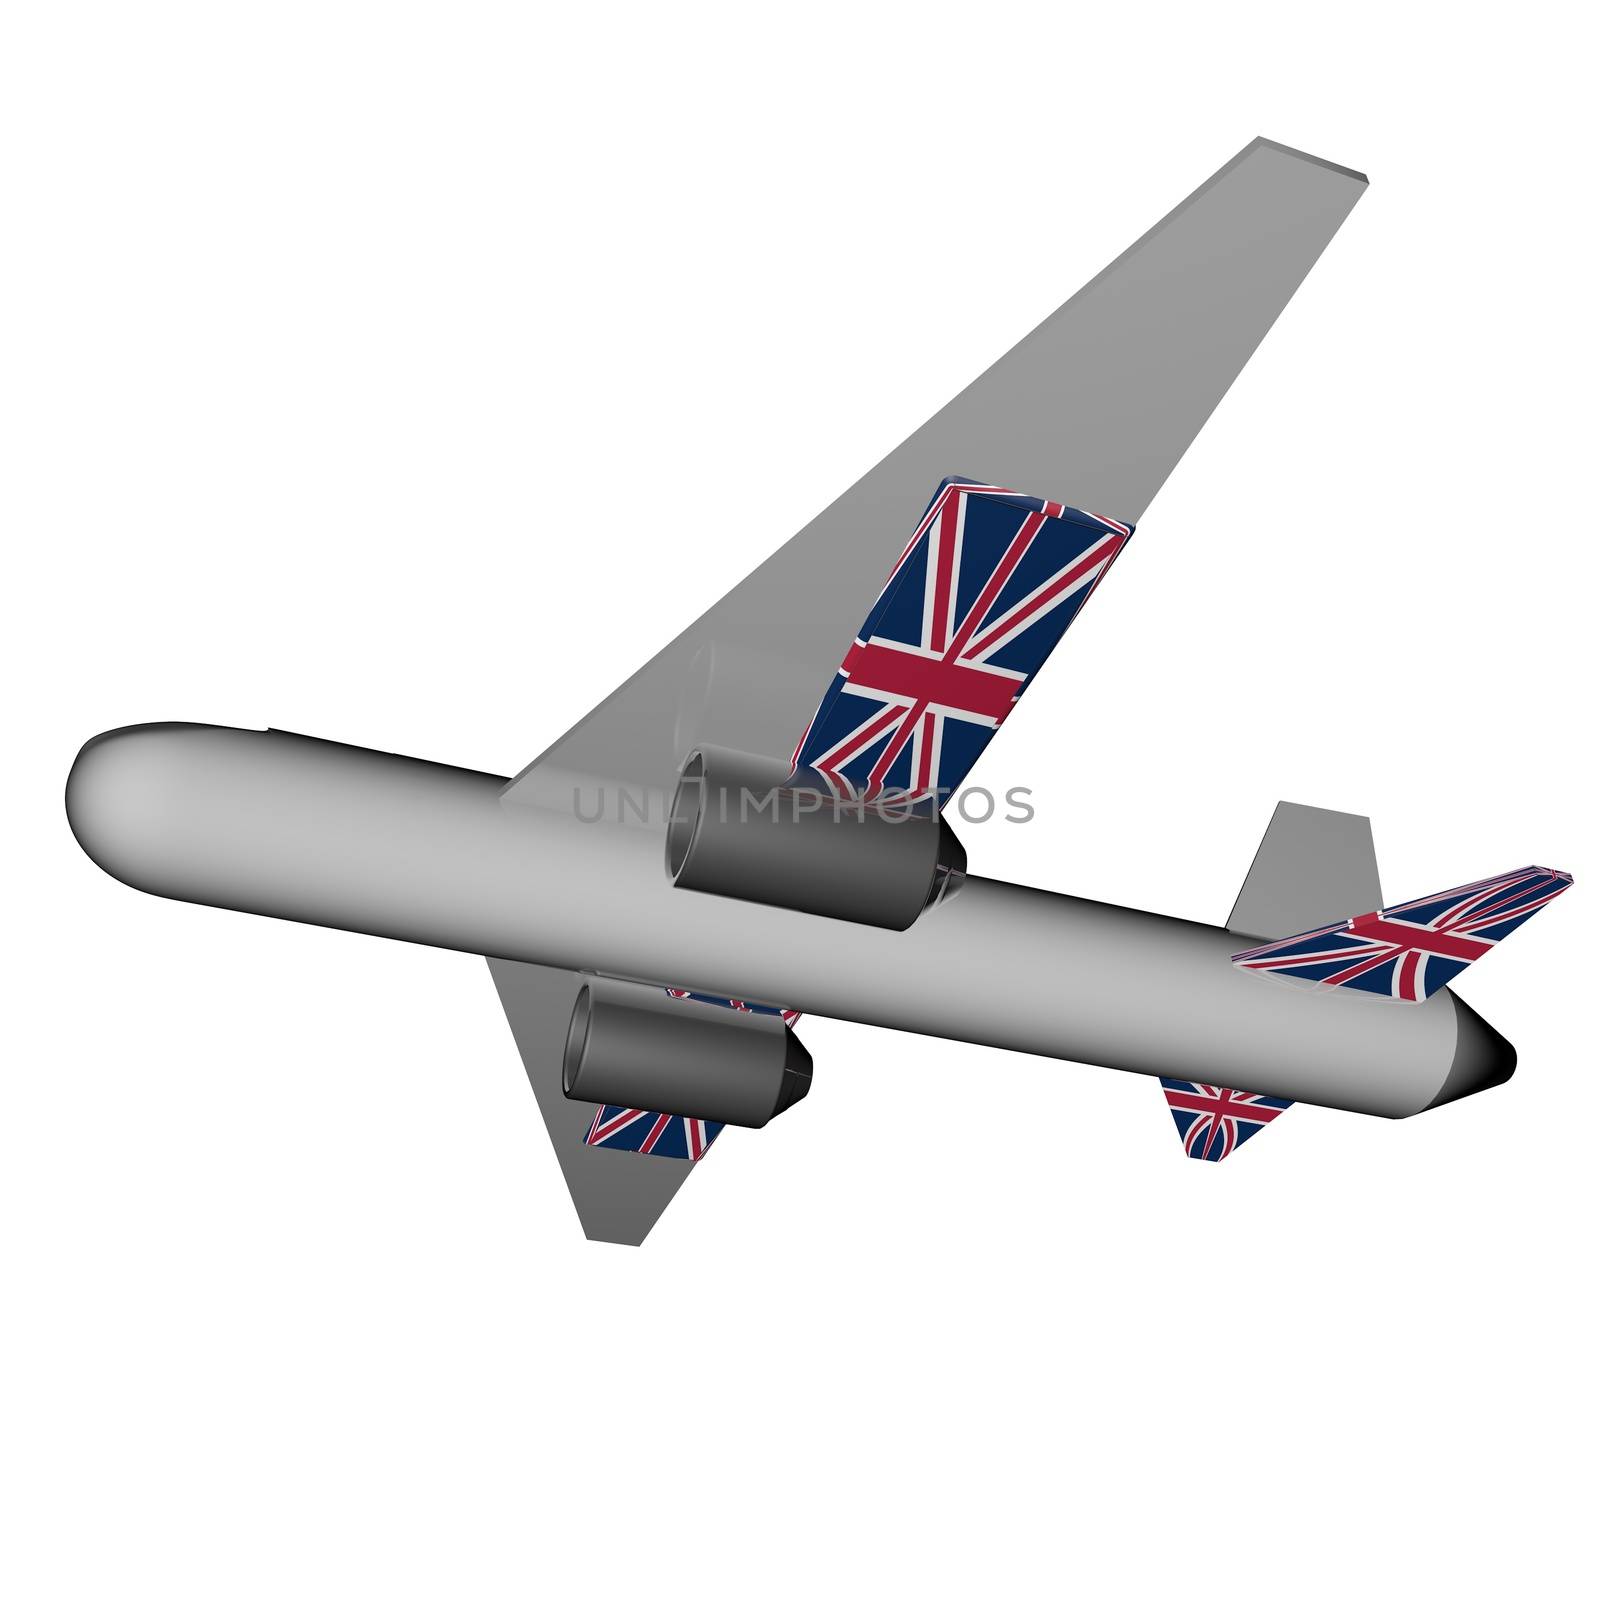 UK Plane by Koufax73